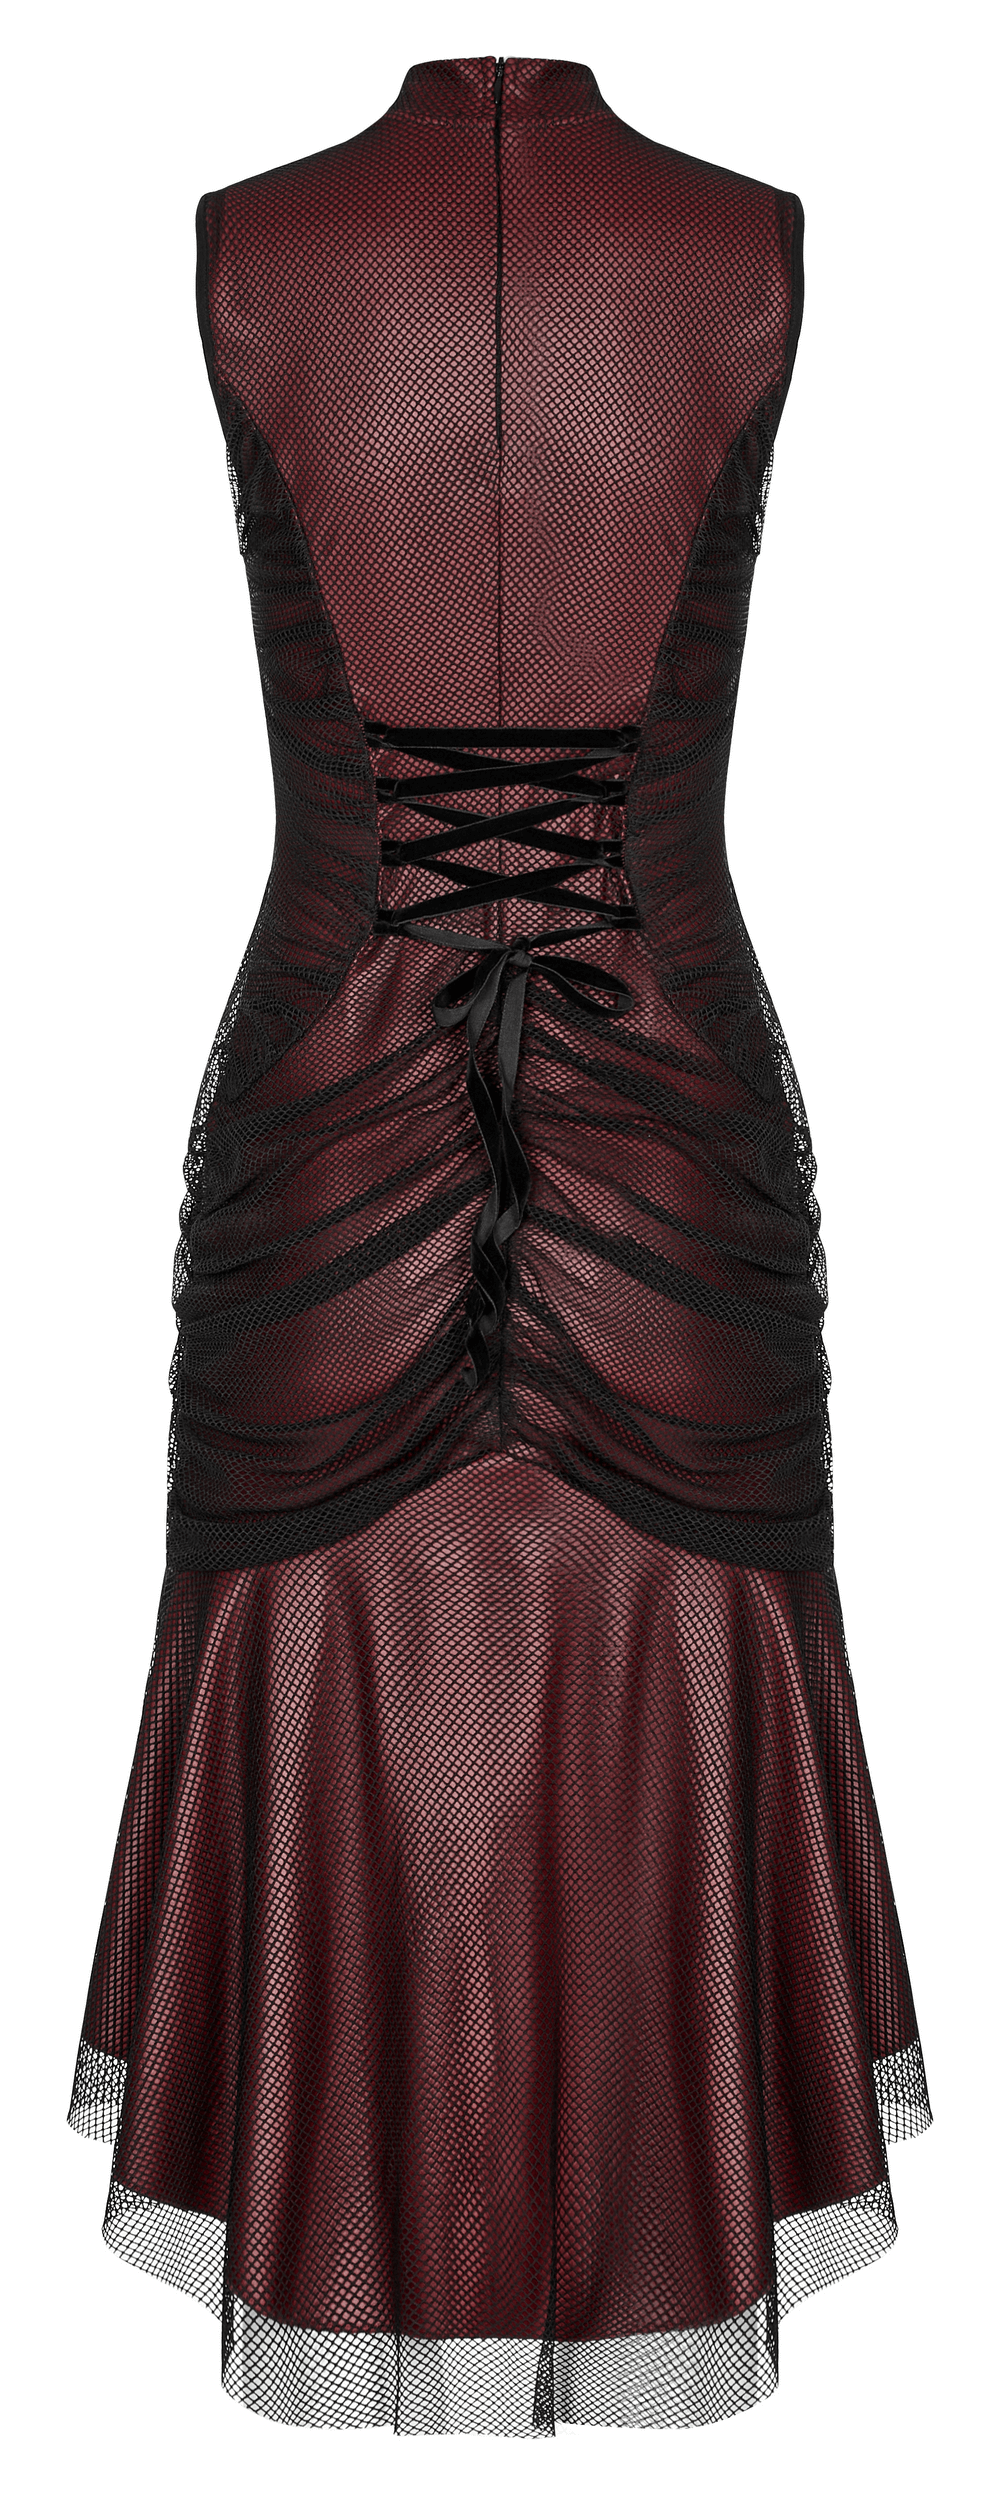 Chic Elastic Gothic Fishtail Dress with Mesh Overlay - HARD'N'HEAVY